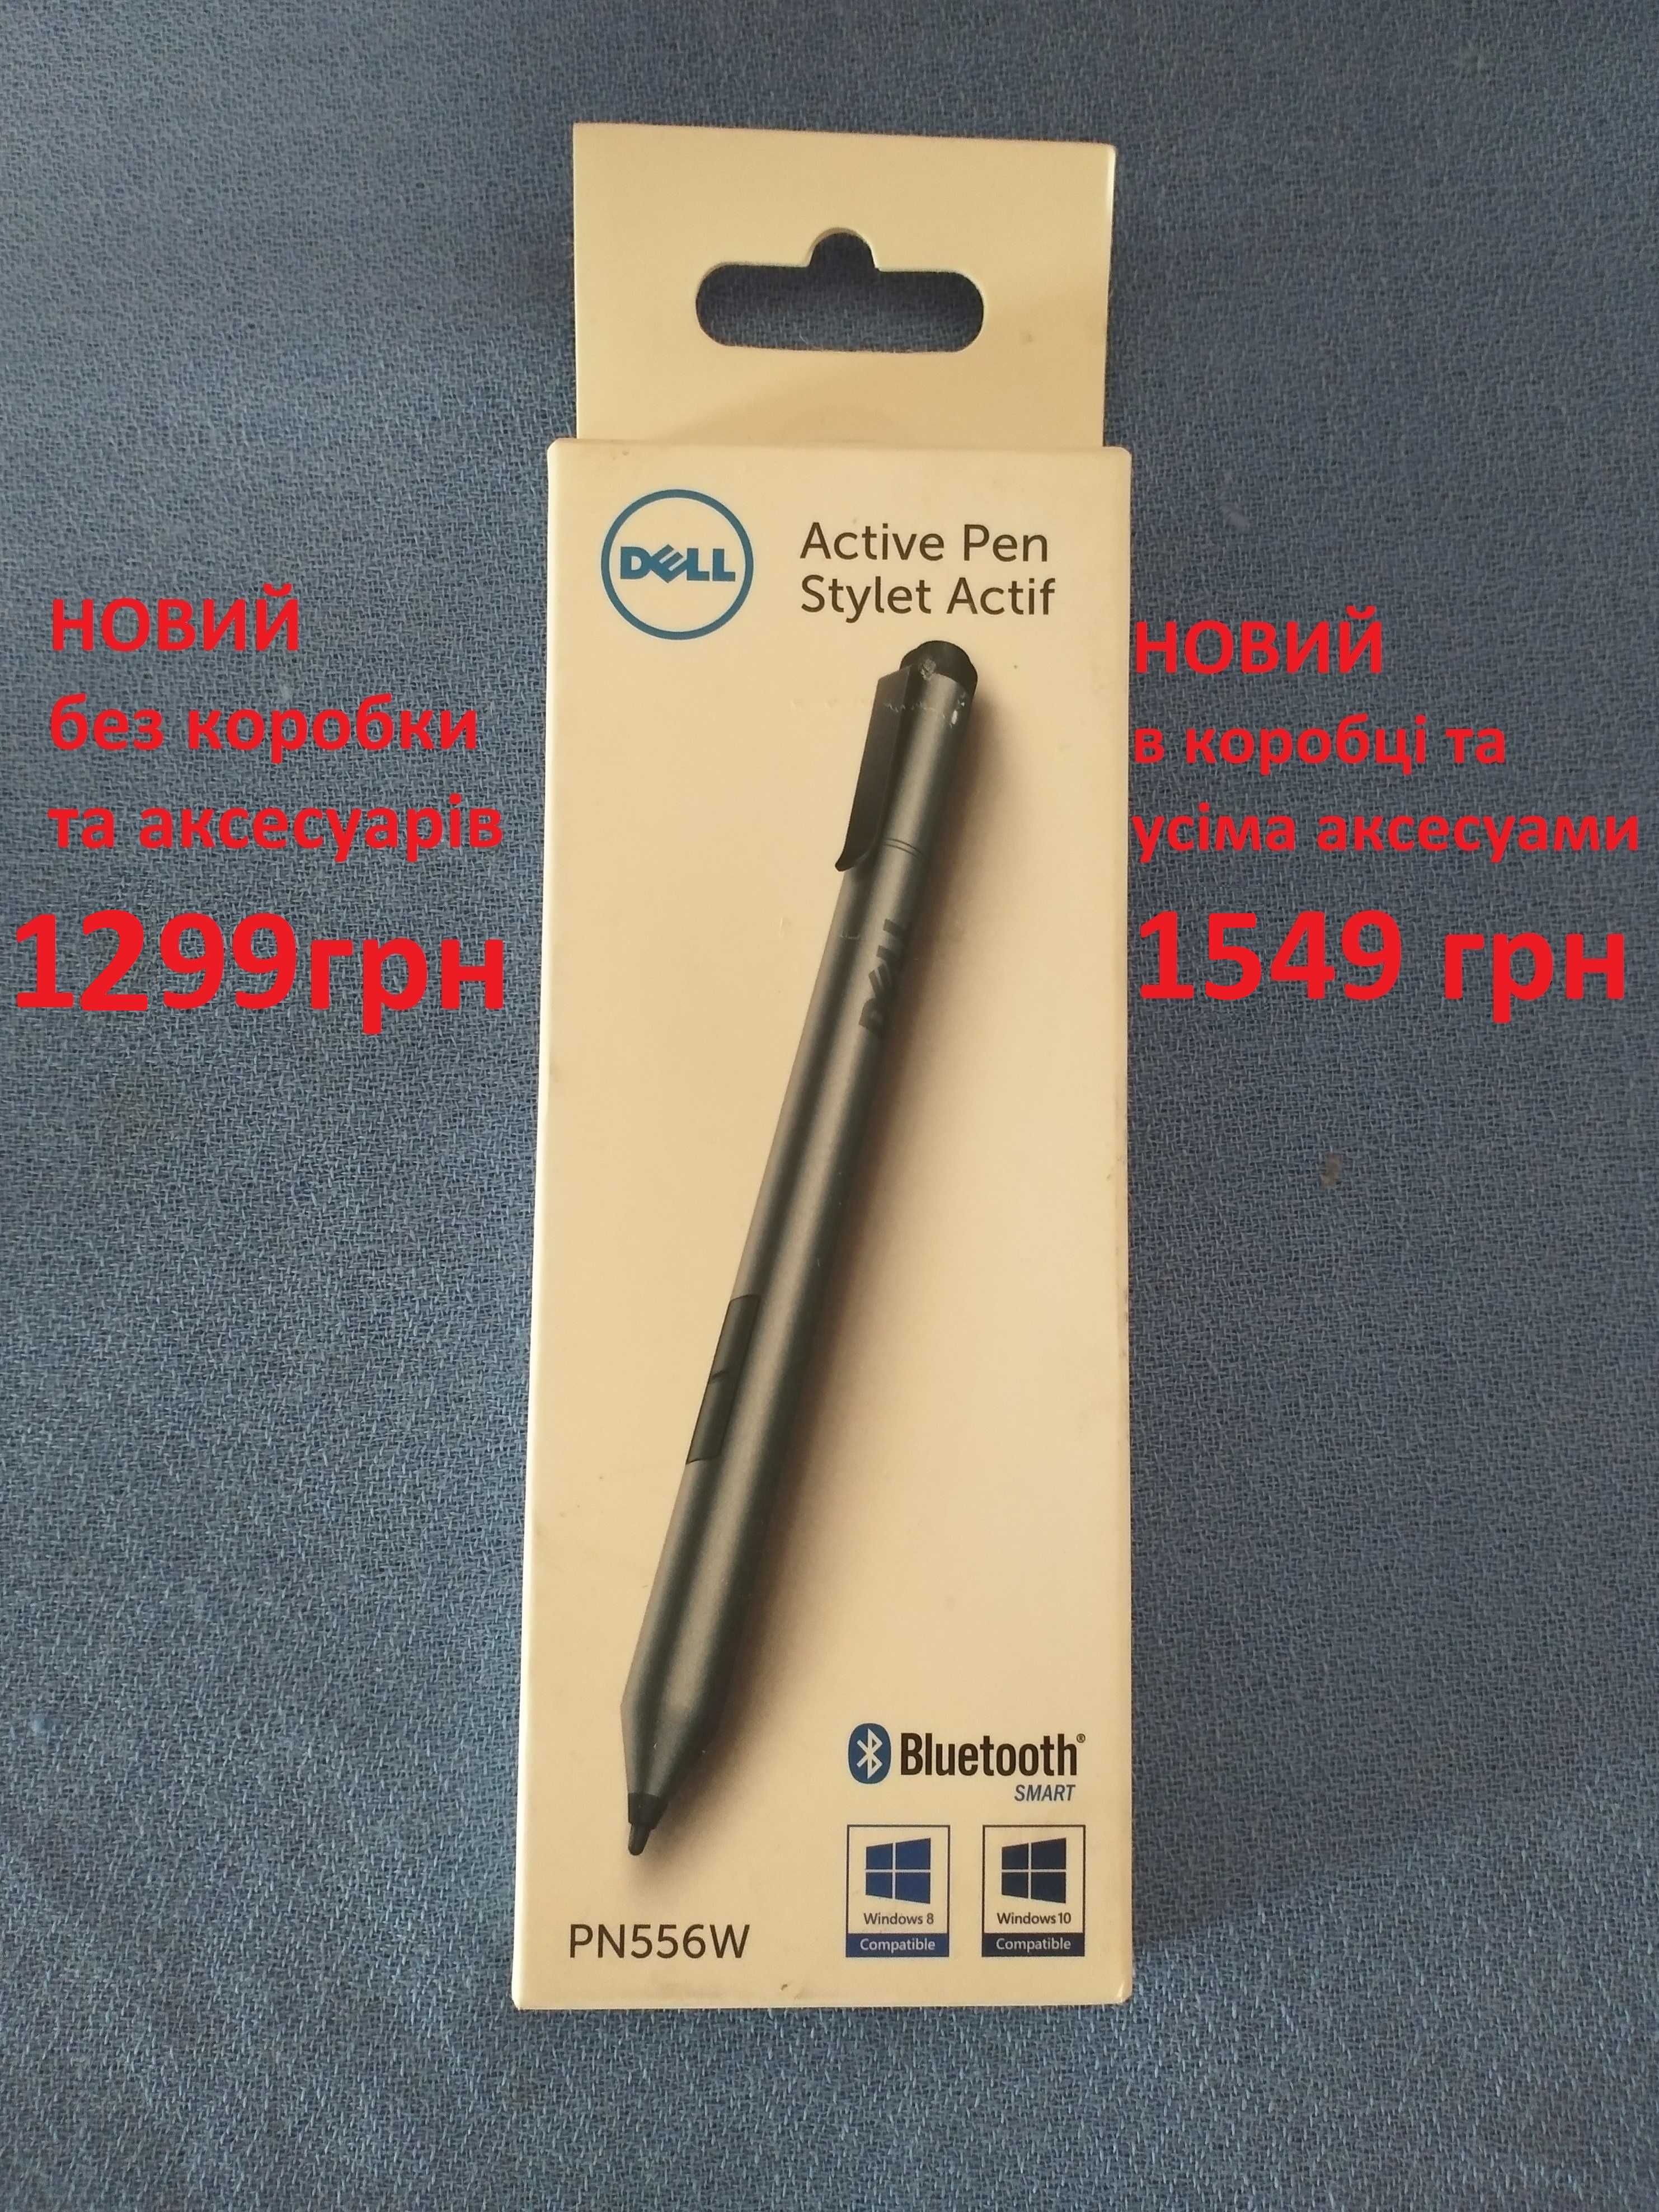 НОВИЙ Активний стилус Dell Active Pen pn556w pn350M pn338M pn579X